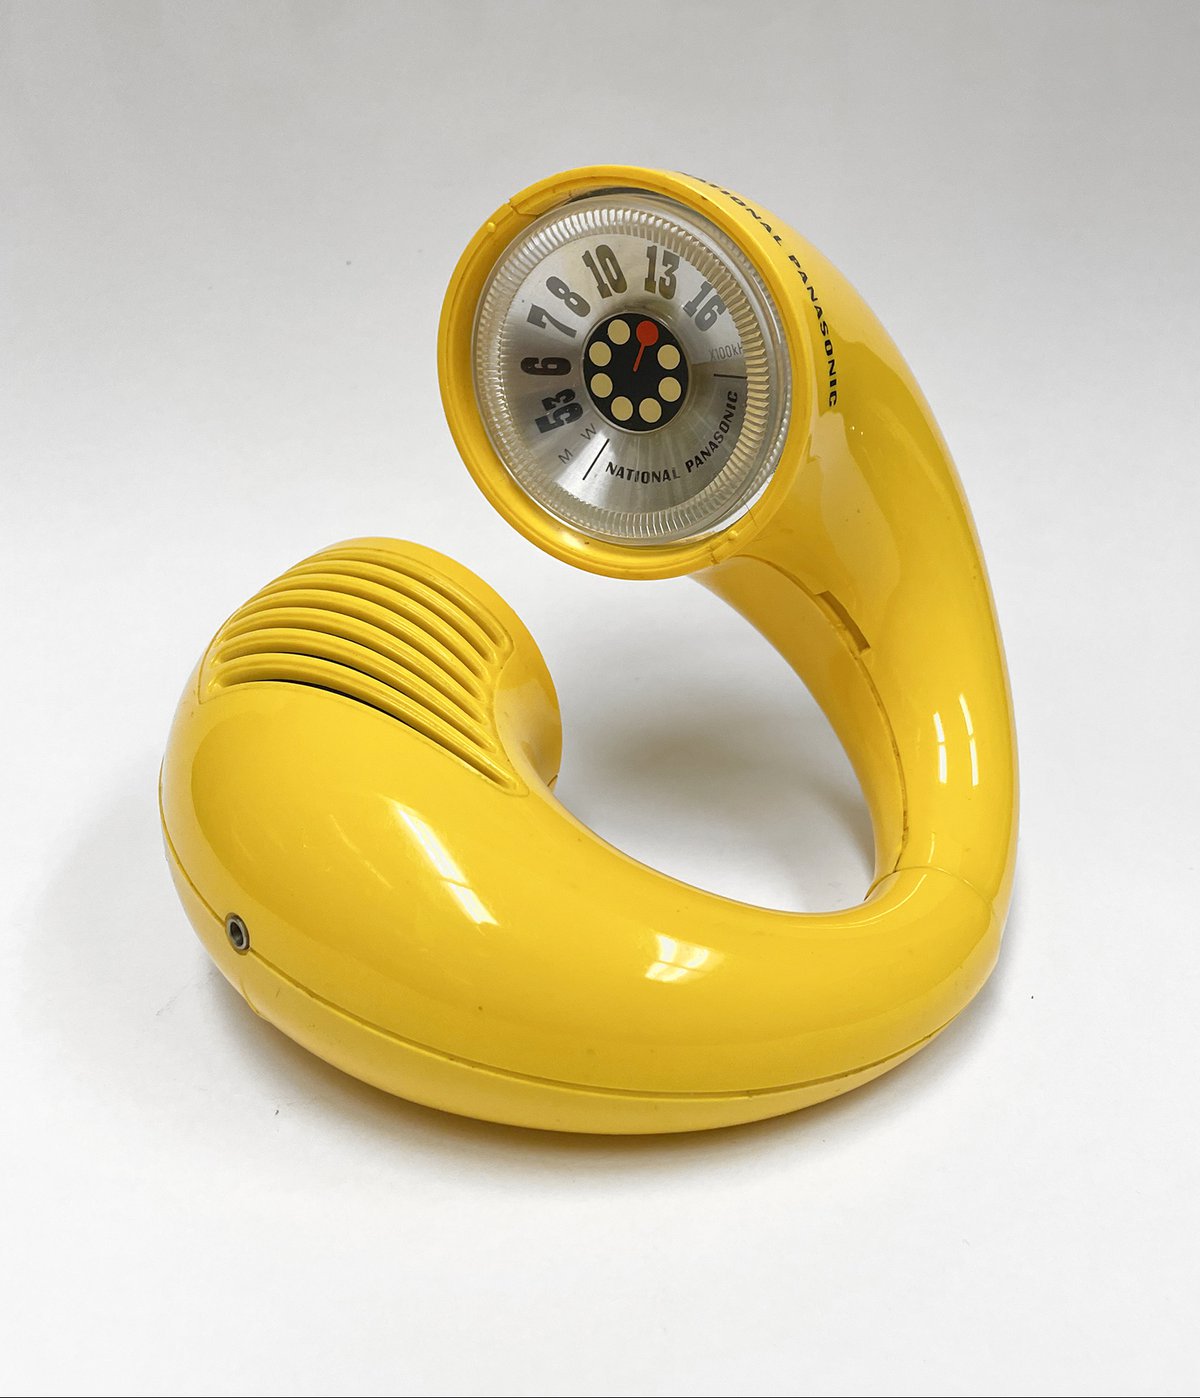 yellow circular telephone